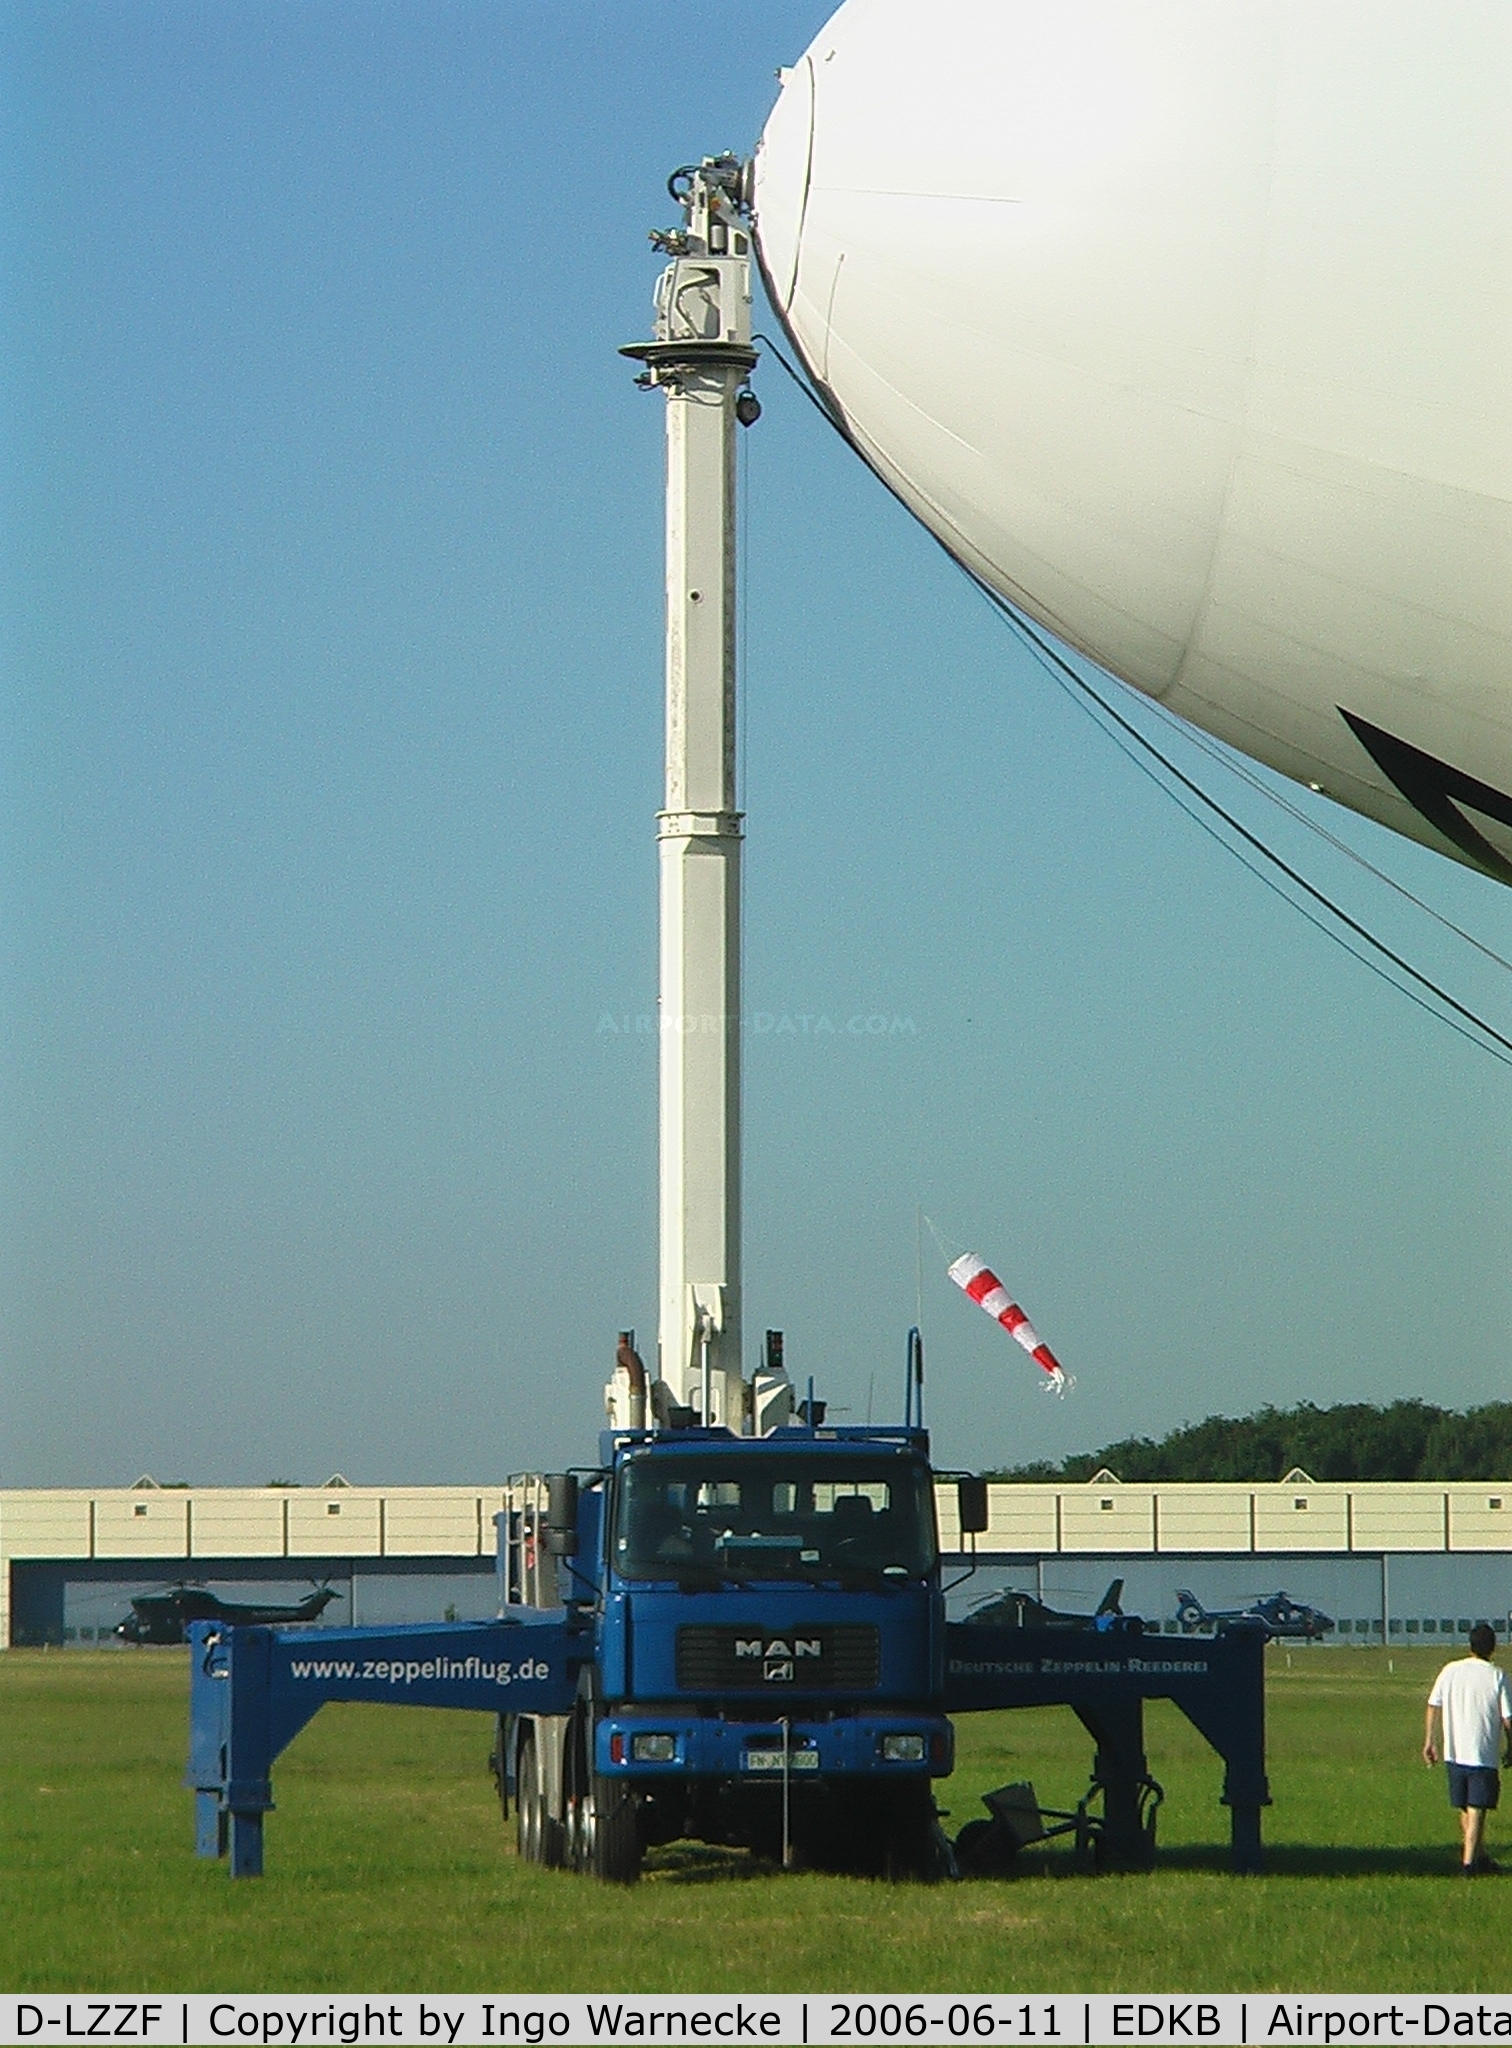 D-LZZF, 1998 Zeppelin NT07 C/N 3, Zeppelin NT - Deutsche Zeppelin Reederei / DLR and its mobile mooring-mast at Bonn/Hangelar airfield